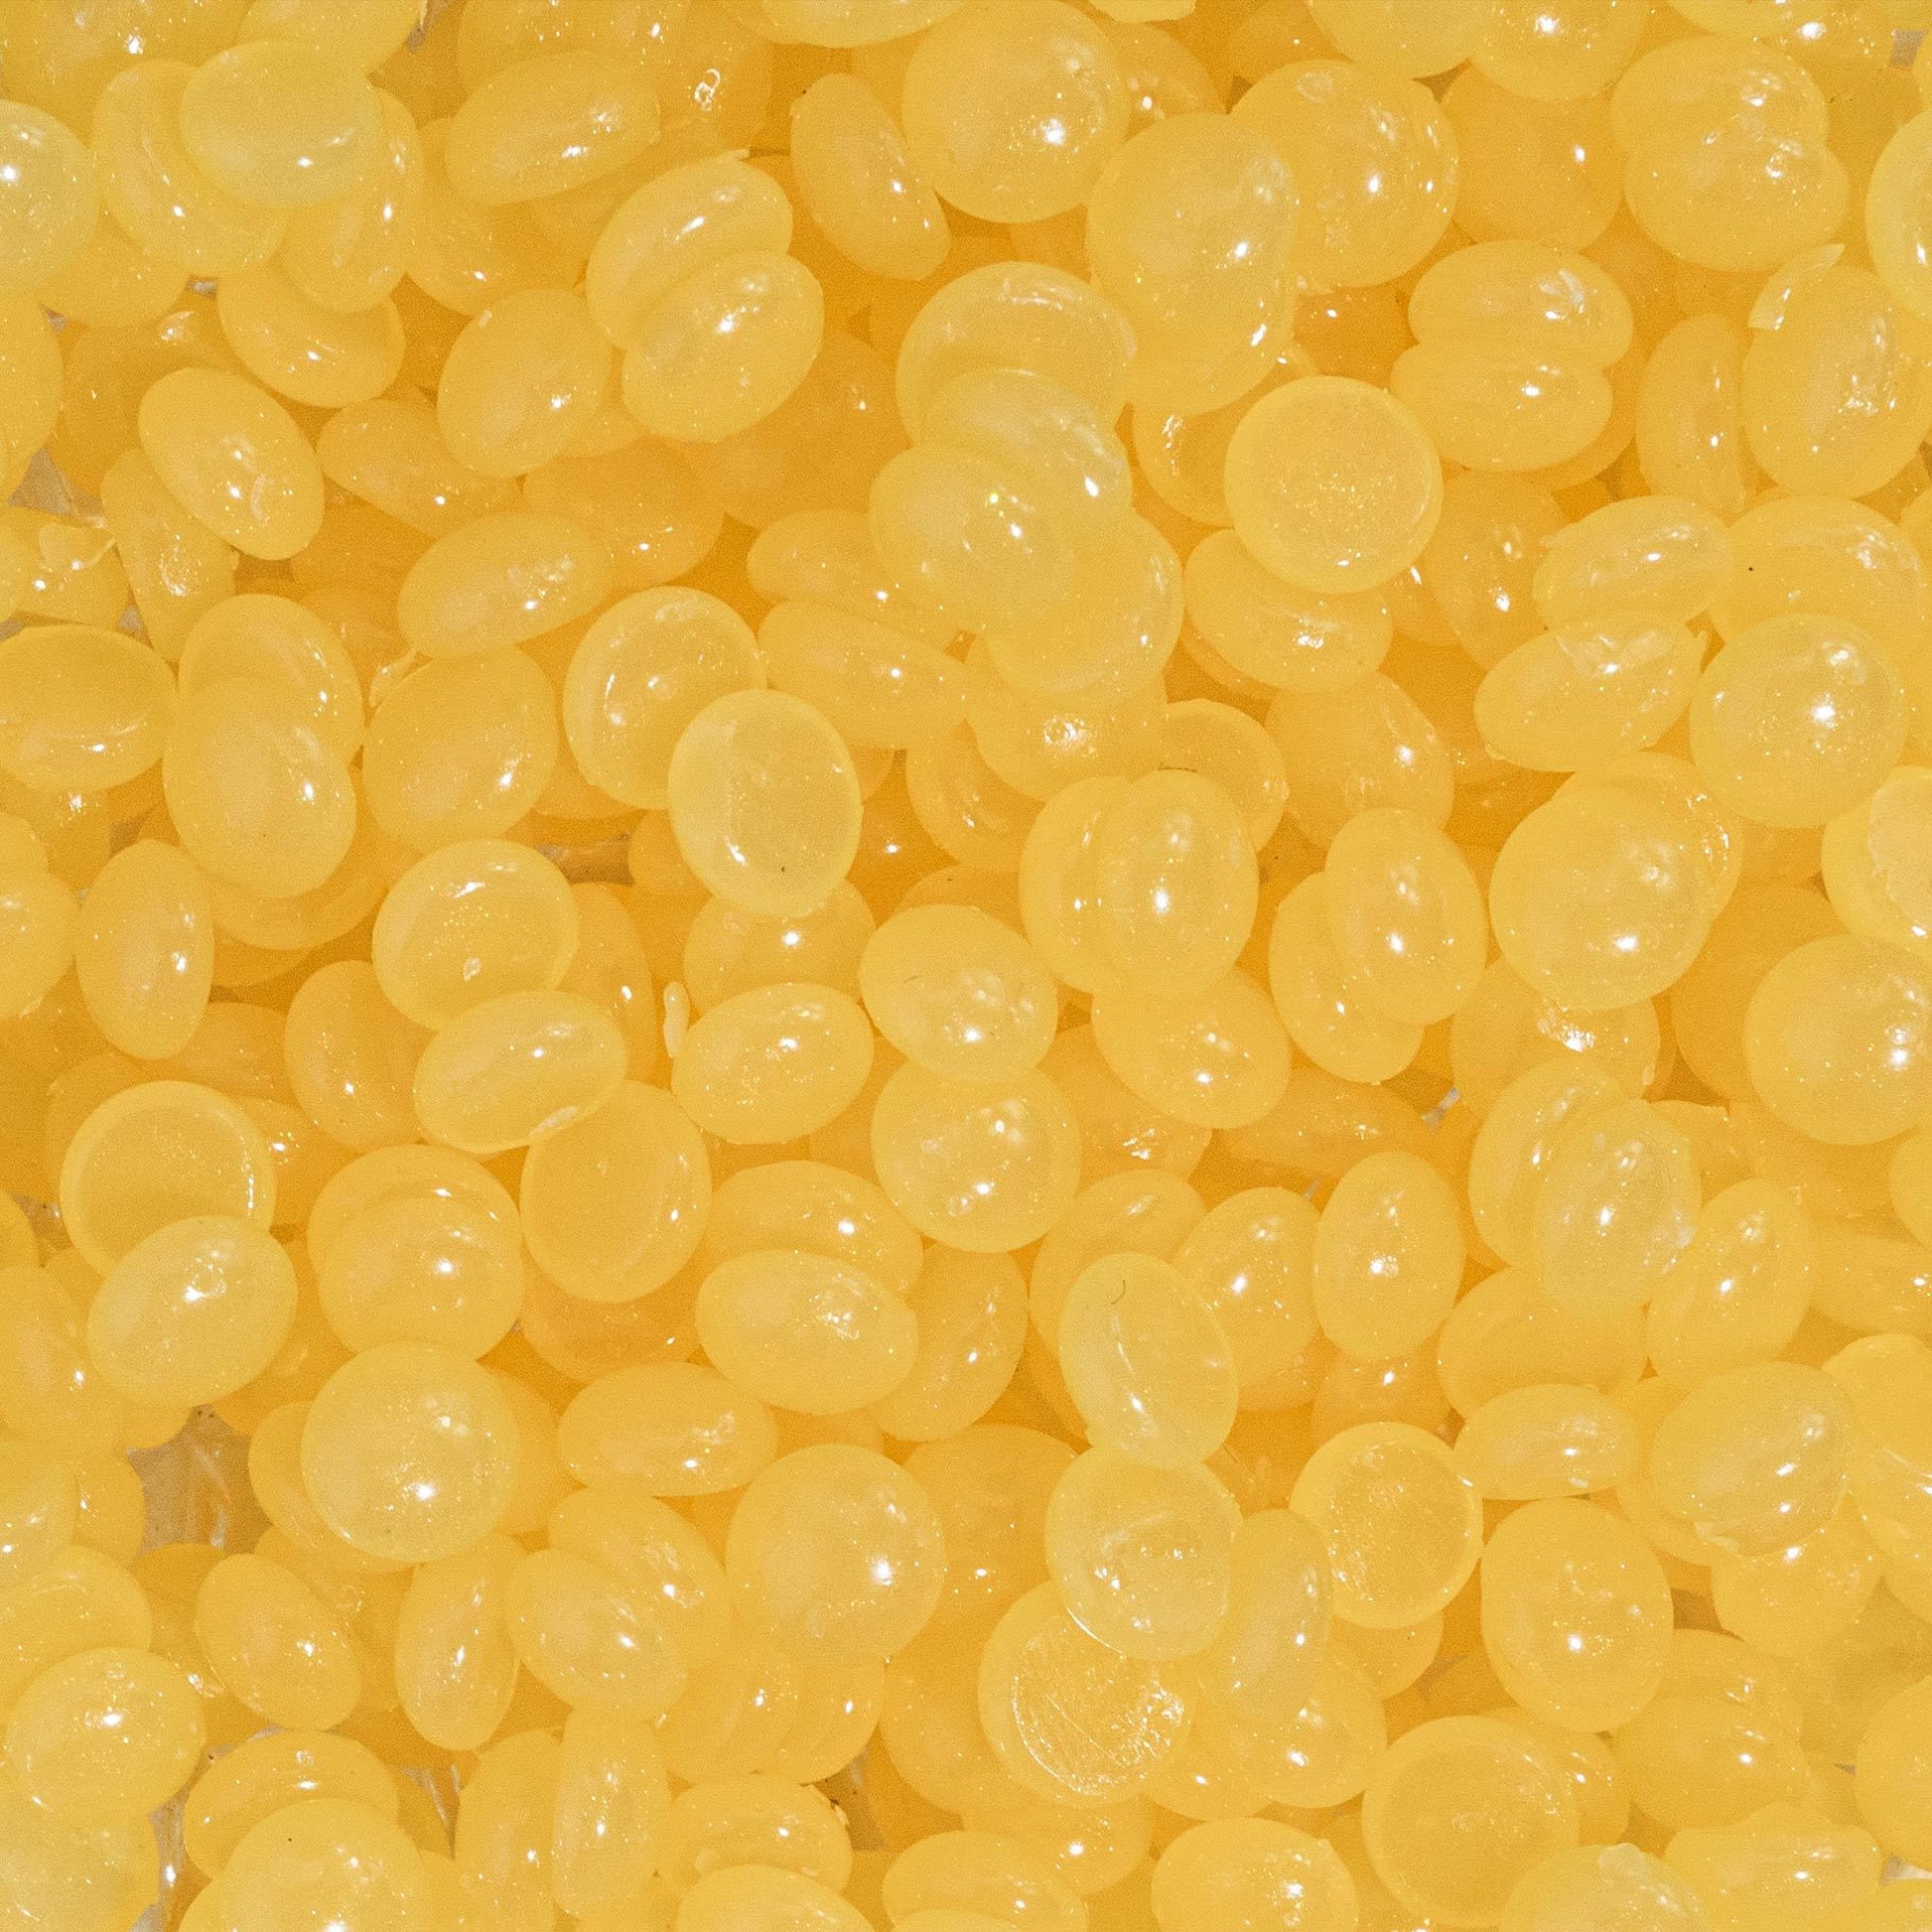 Close up shot of hot wax beads